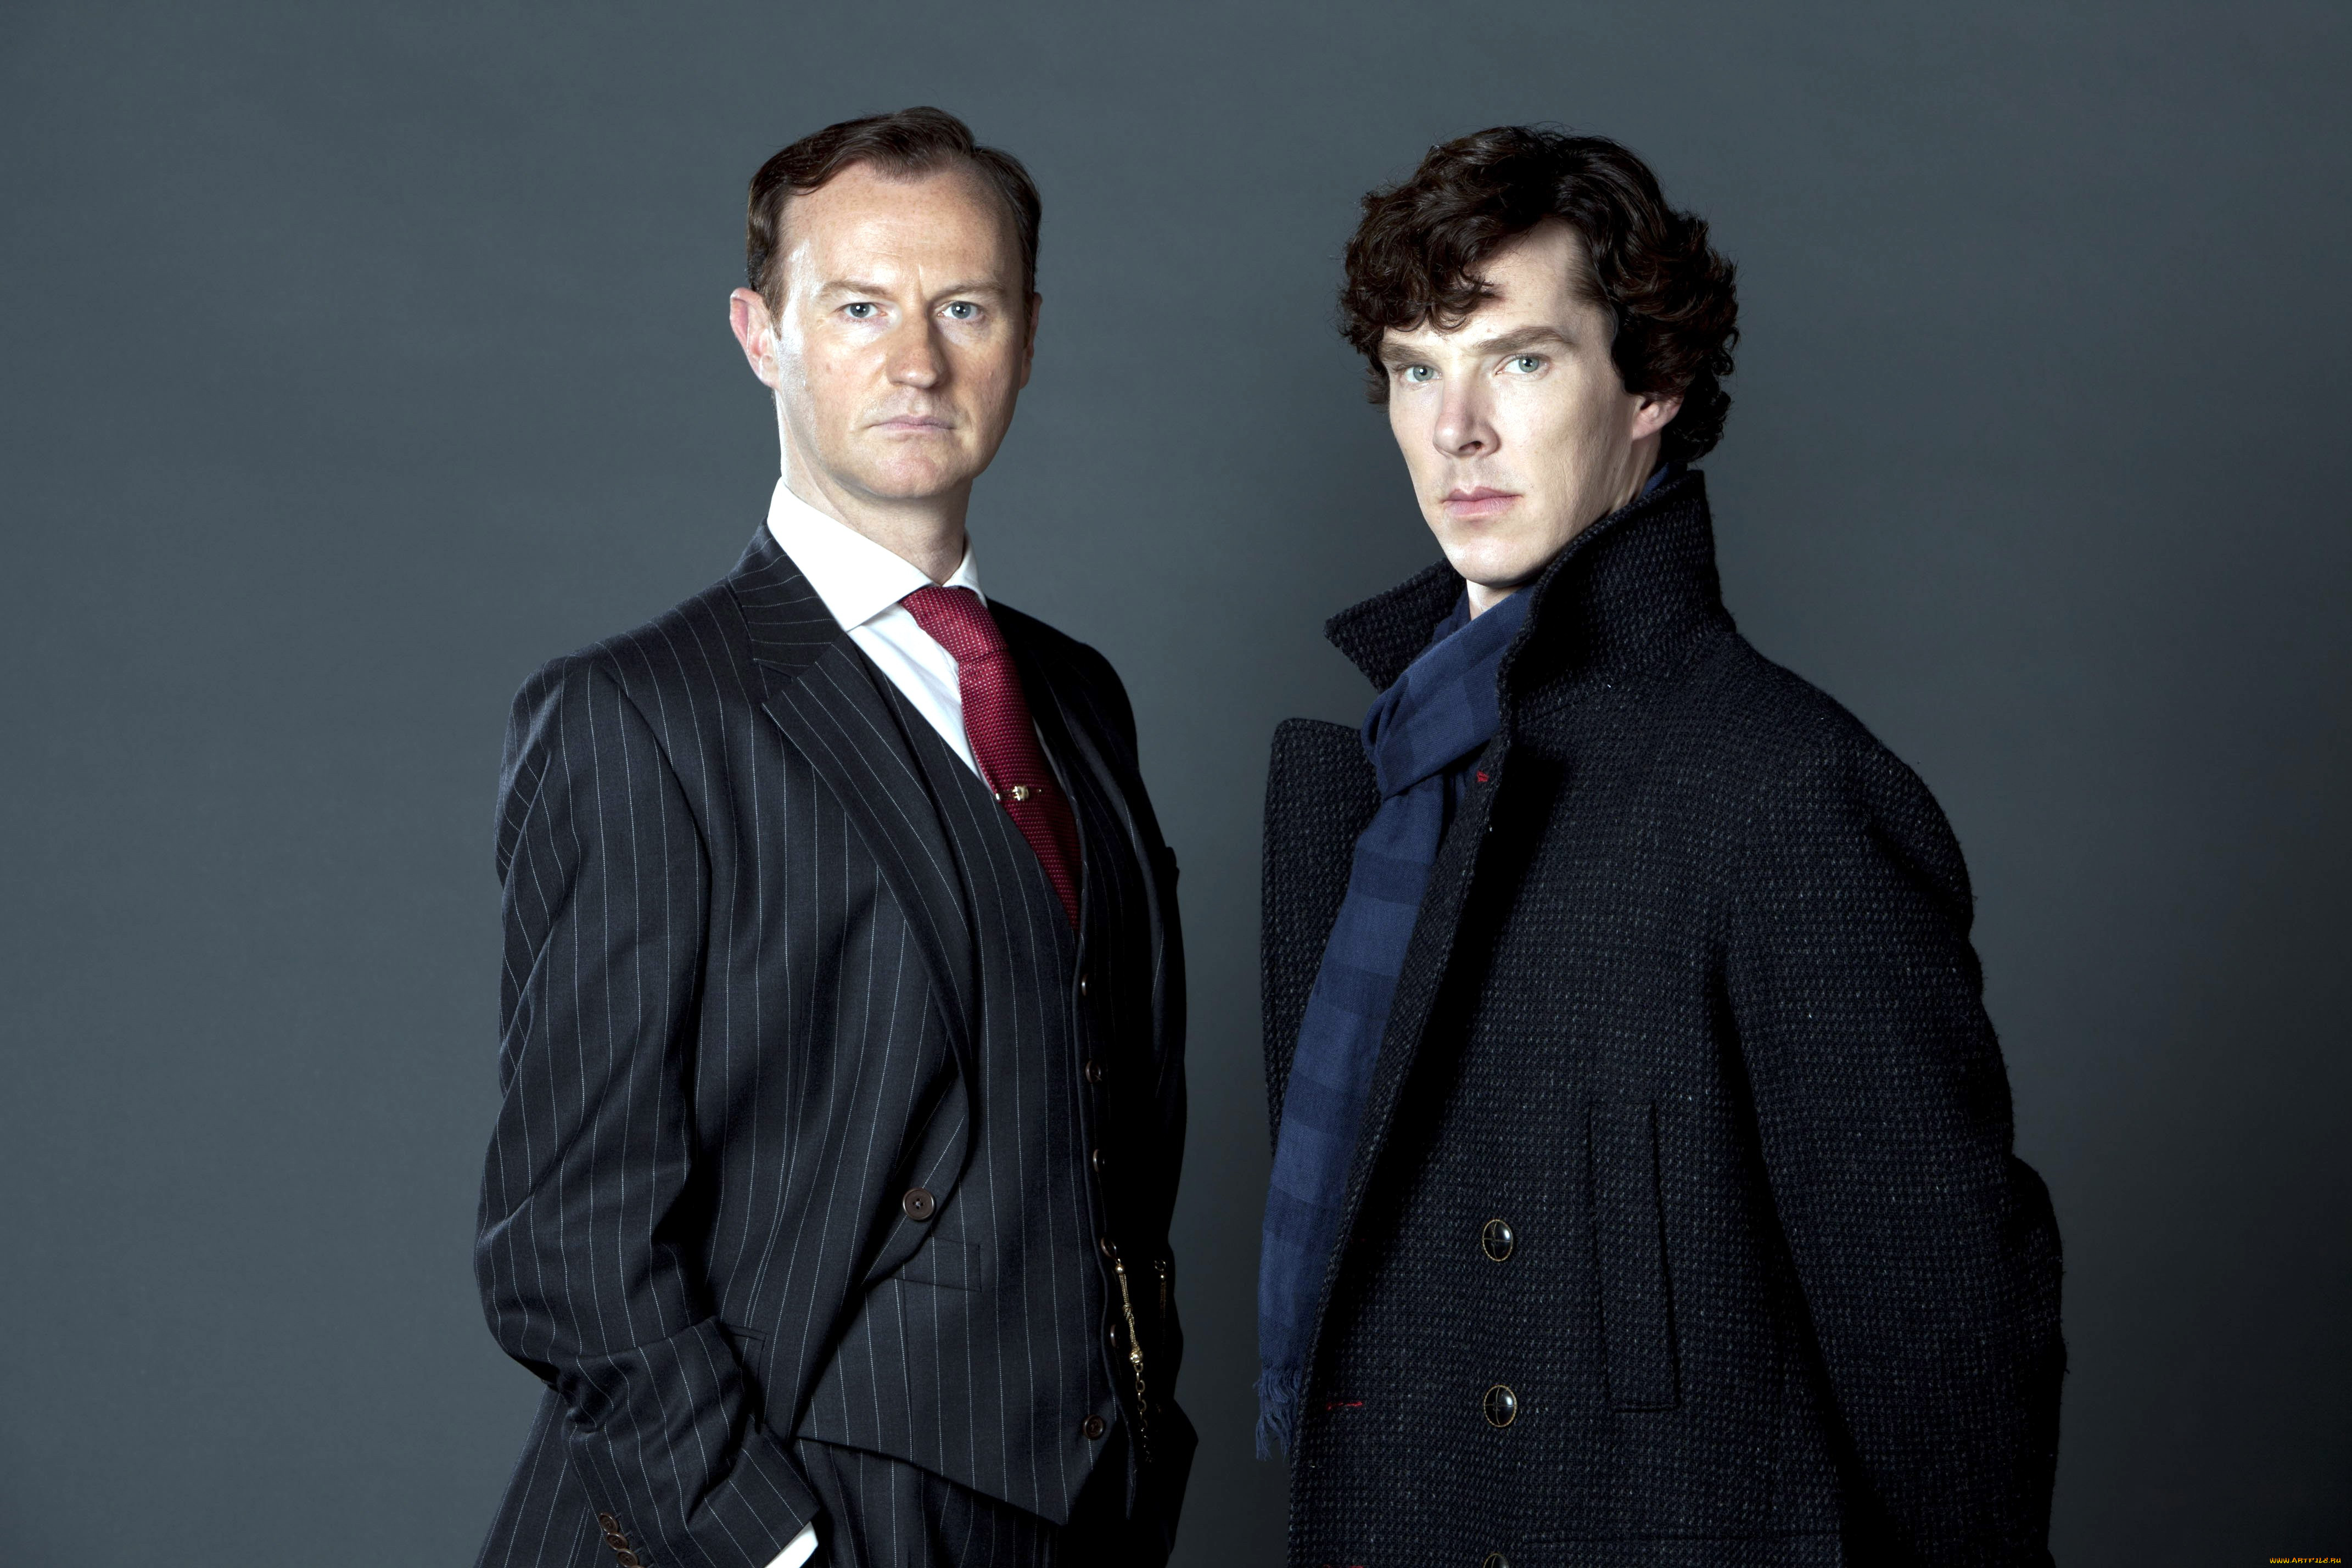 Mycroft. Брат Шерлока Холмса Майкрофт.